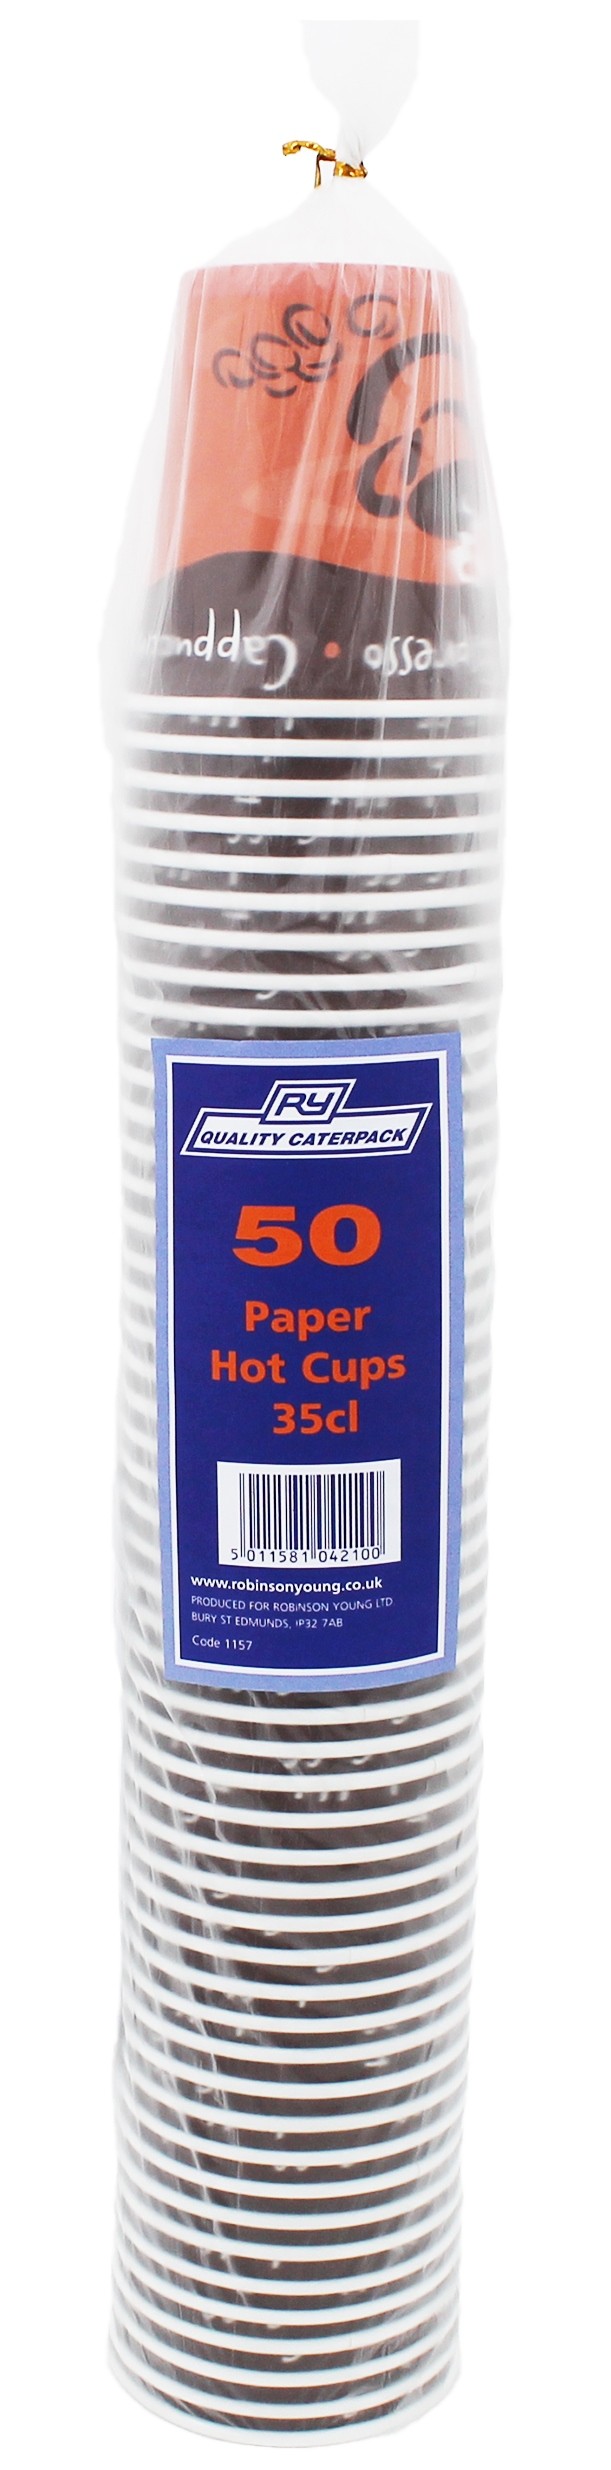 Caterpack Paper Hot Cups 12oz PK50